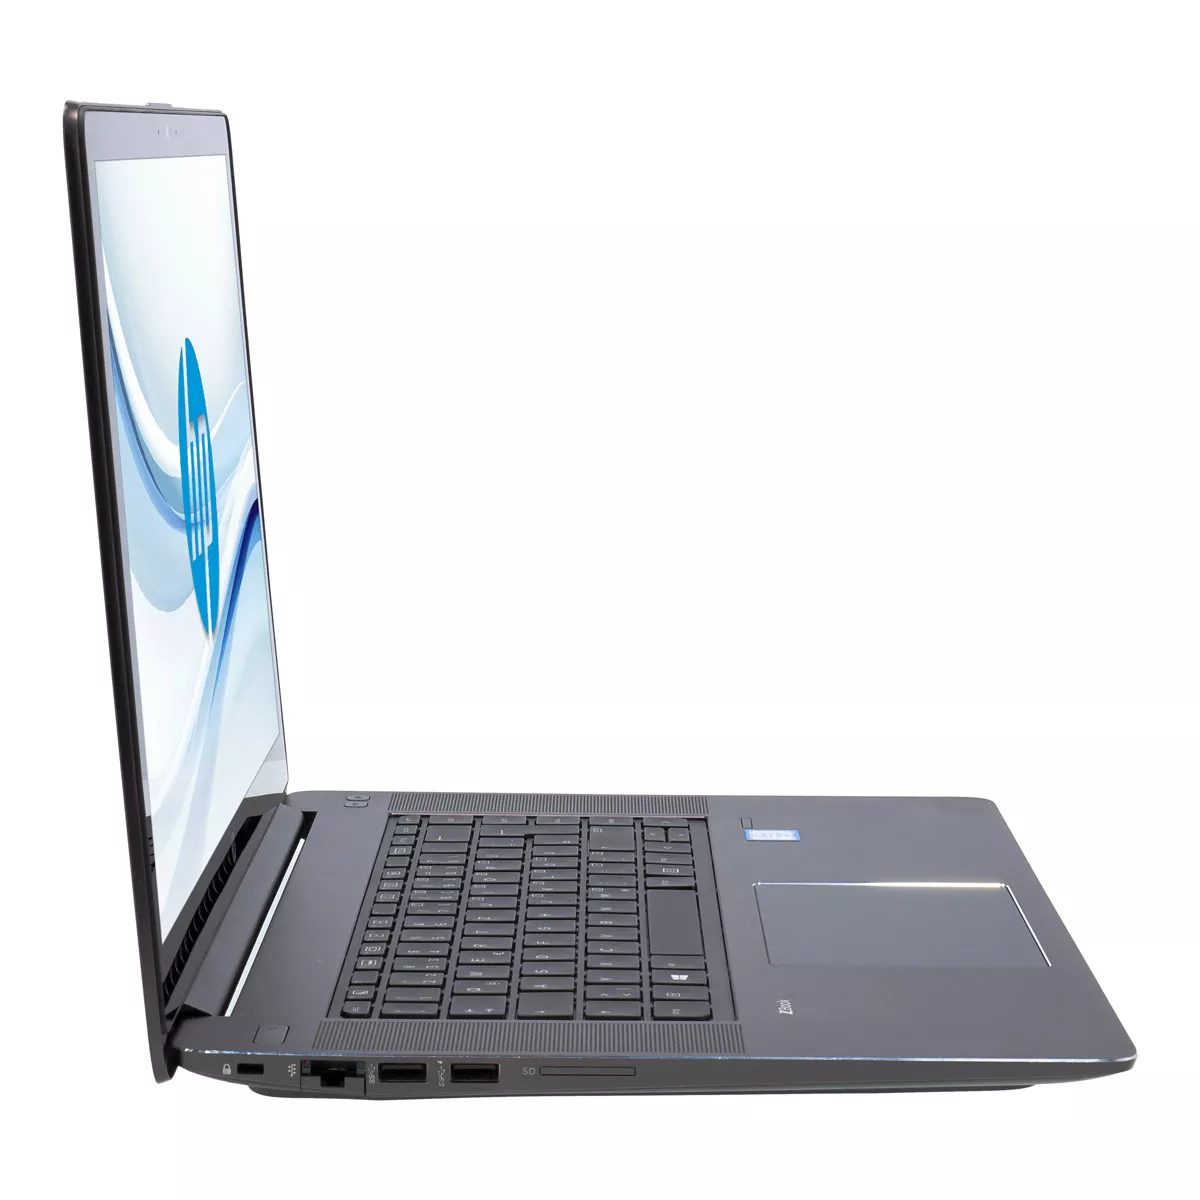 HP ZBook Studio G3 Xeon E3-1505Mv5 Full-HD nVidia Quadro M1000M 512 GB M.2 SSD Webcam